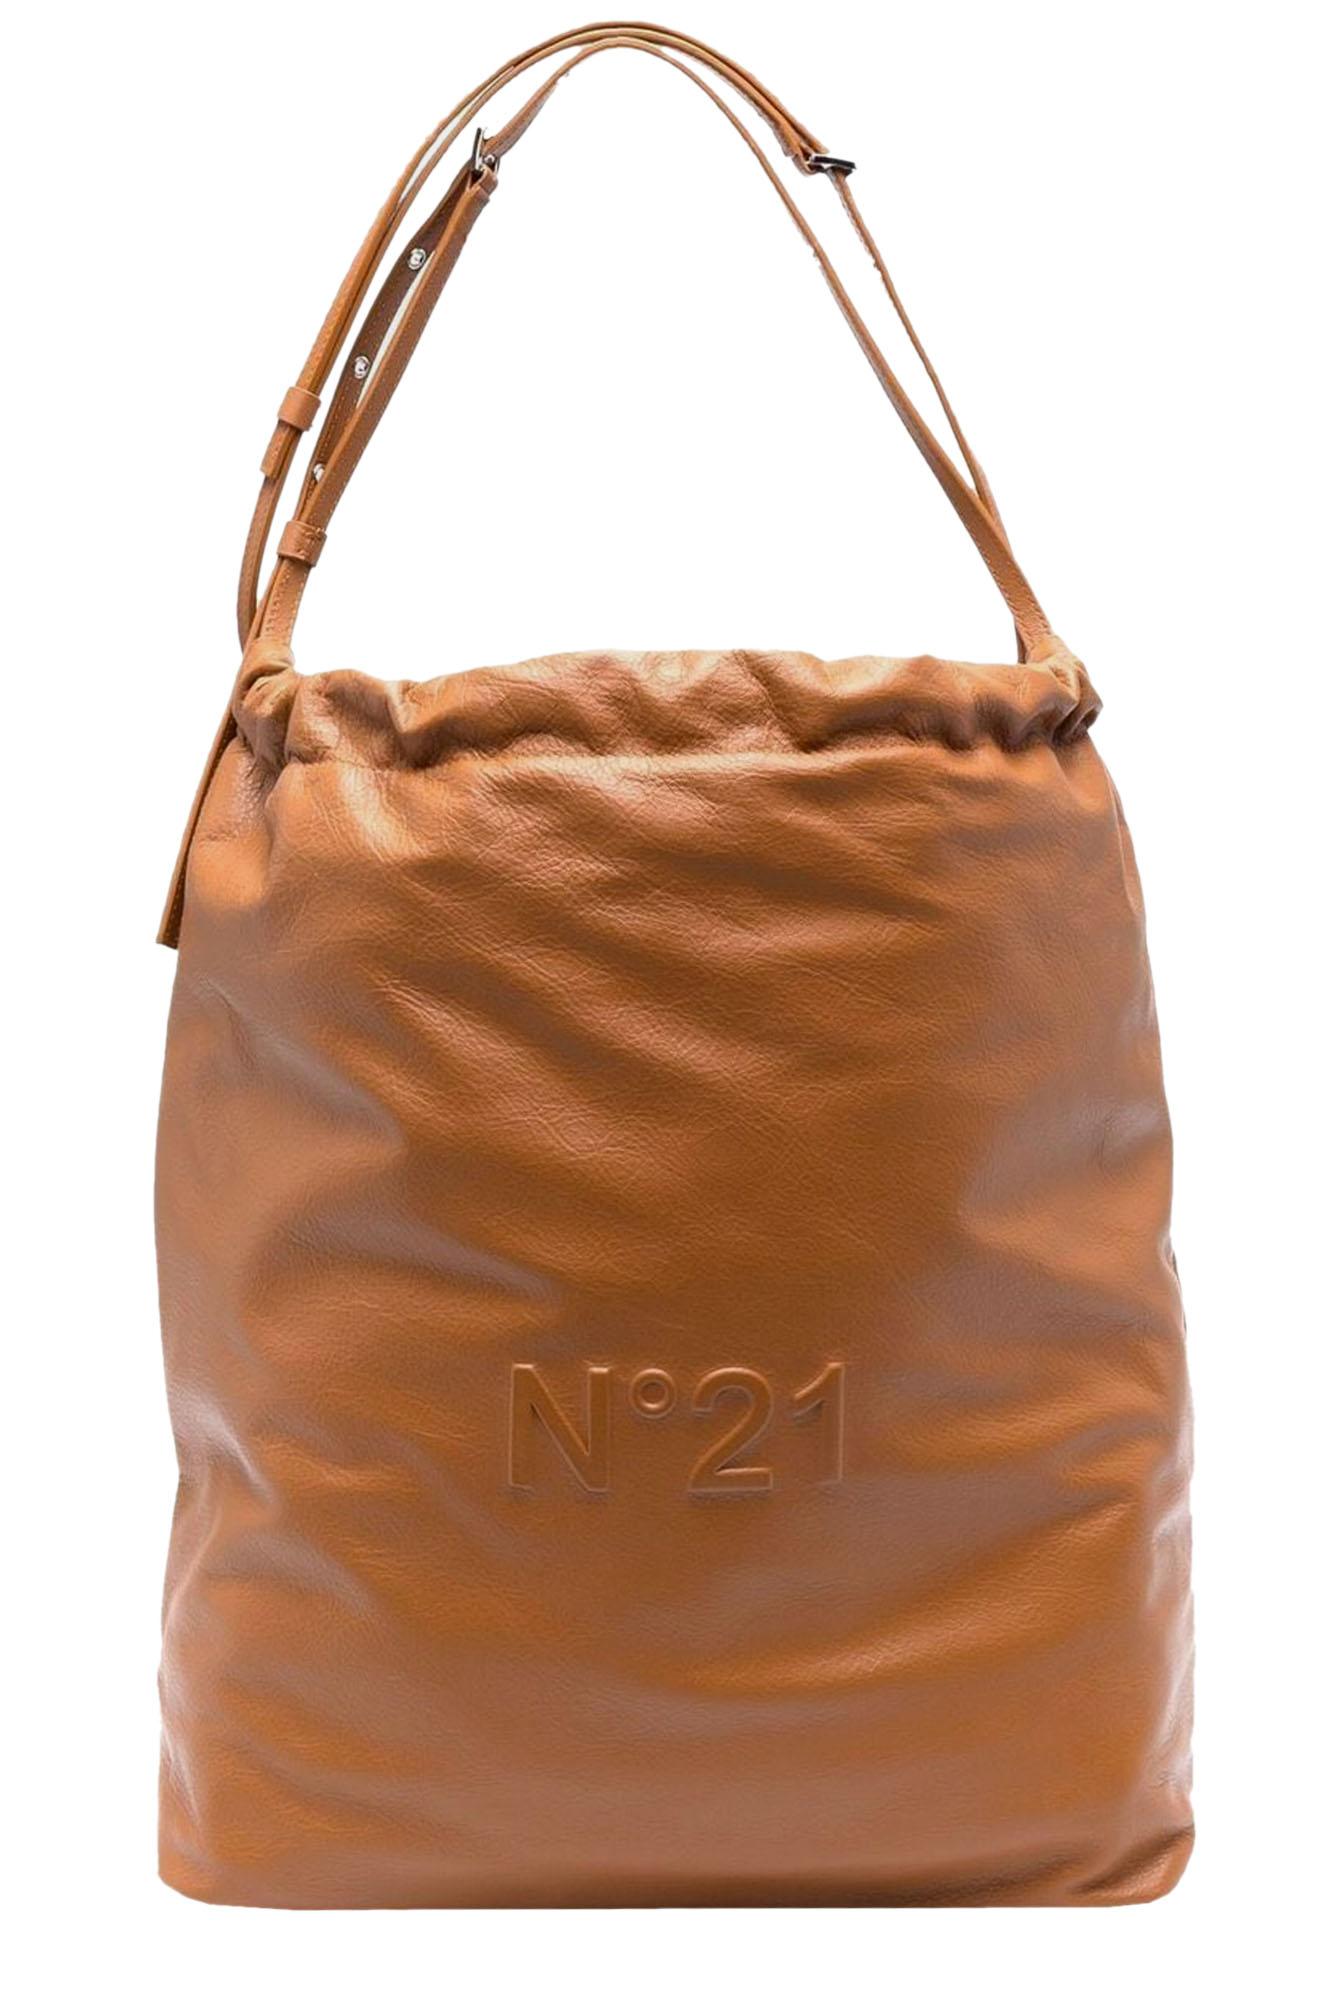 Natural Womens Shoulder bags N°21 Shoulder bags - Save 23% N°21 Leather Eva Shoulder Bag in Brown 